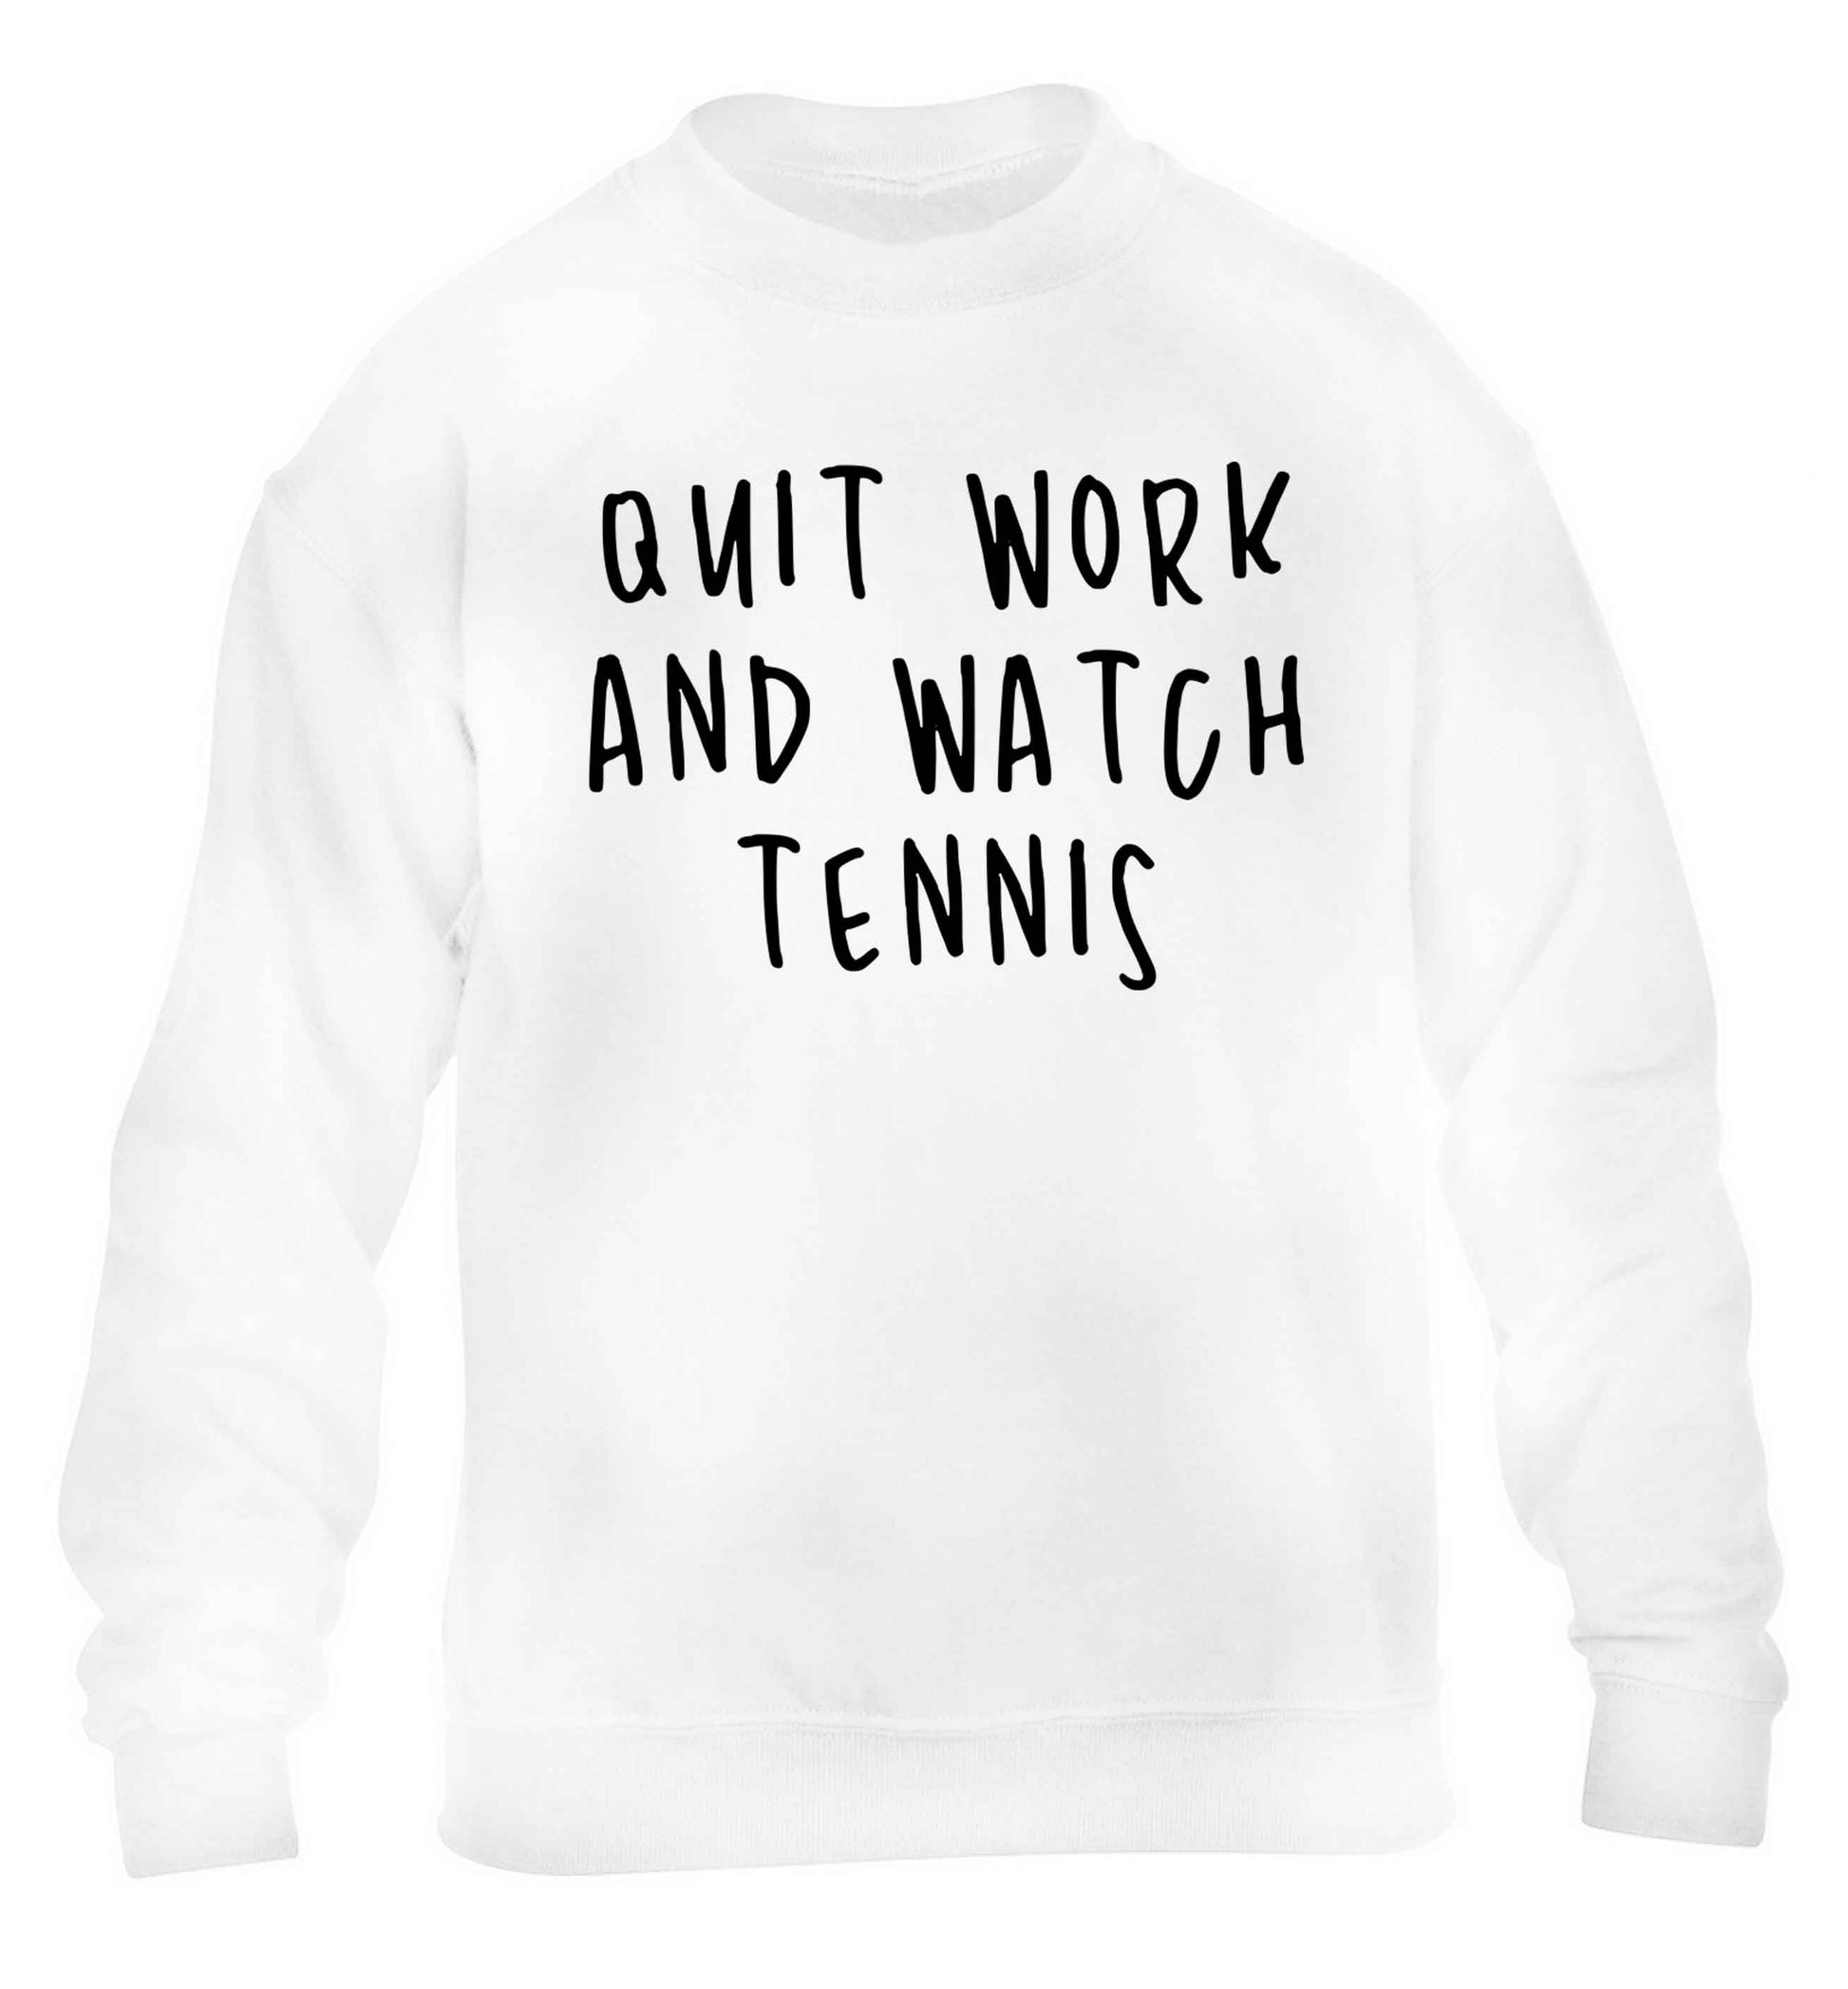 Quit work and watch tennis children's white sweater 12-13 Years